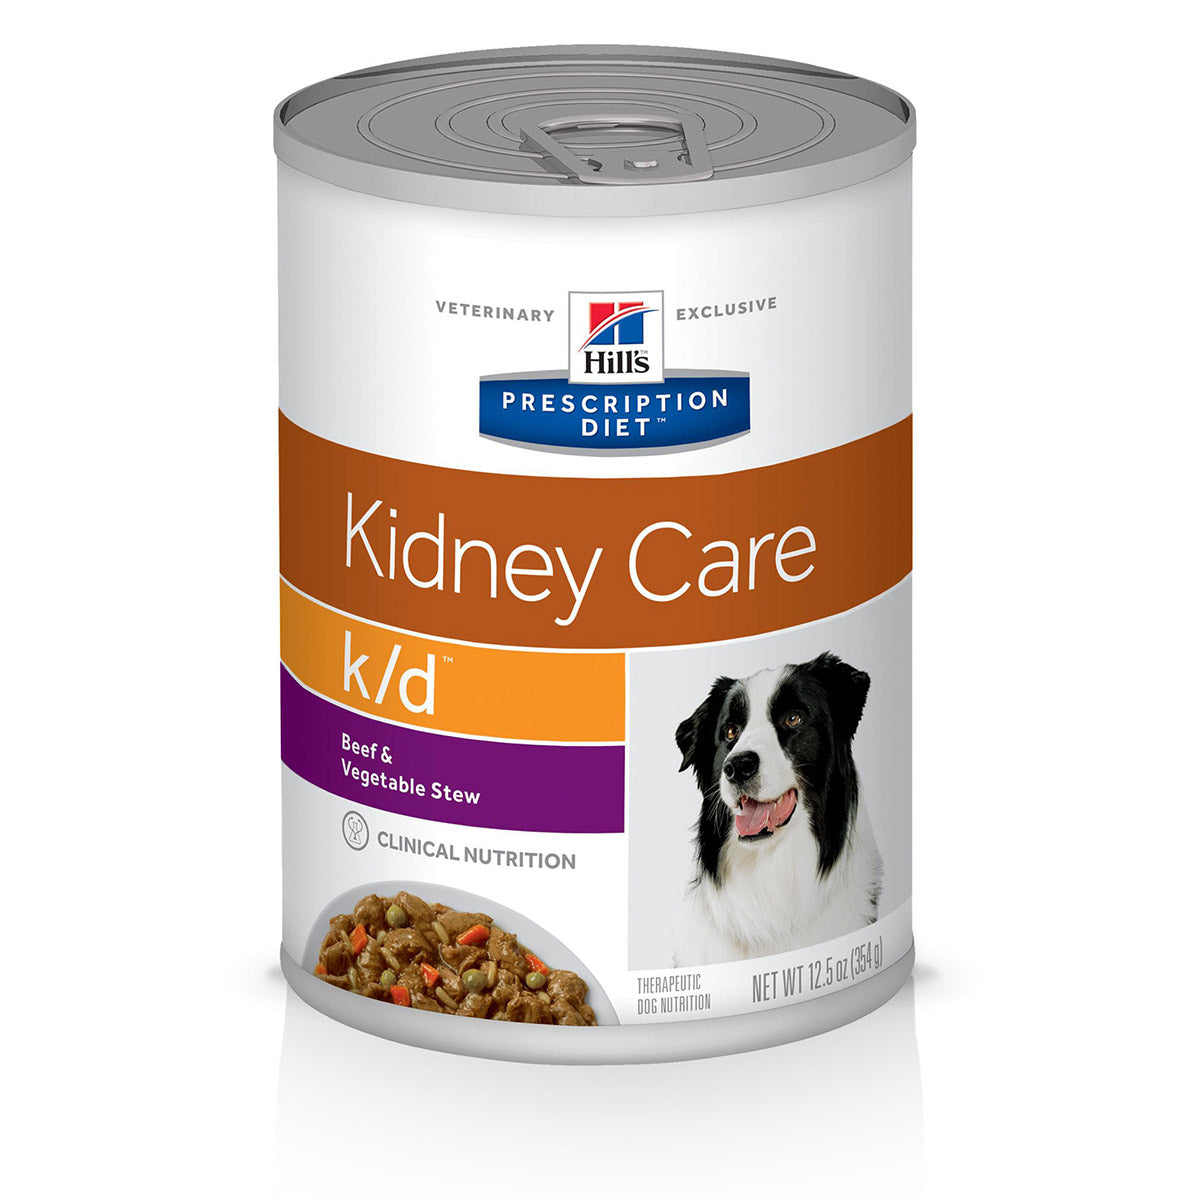 Hill's® Prescription Diet® k/d (Kidney Diet) Canine